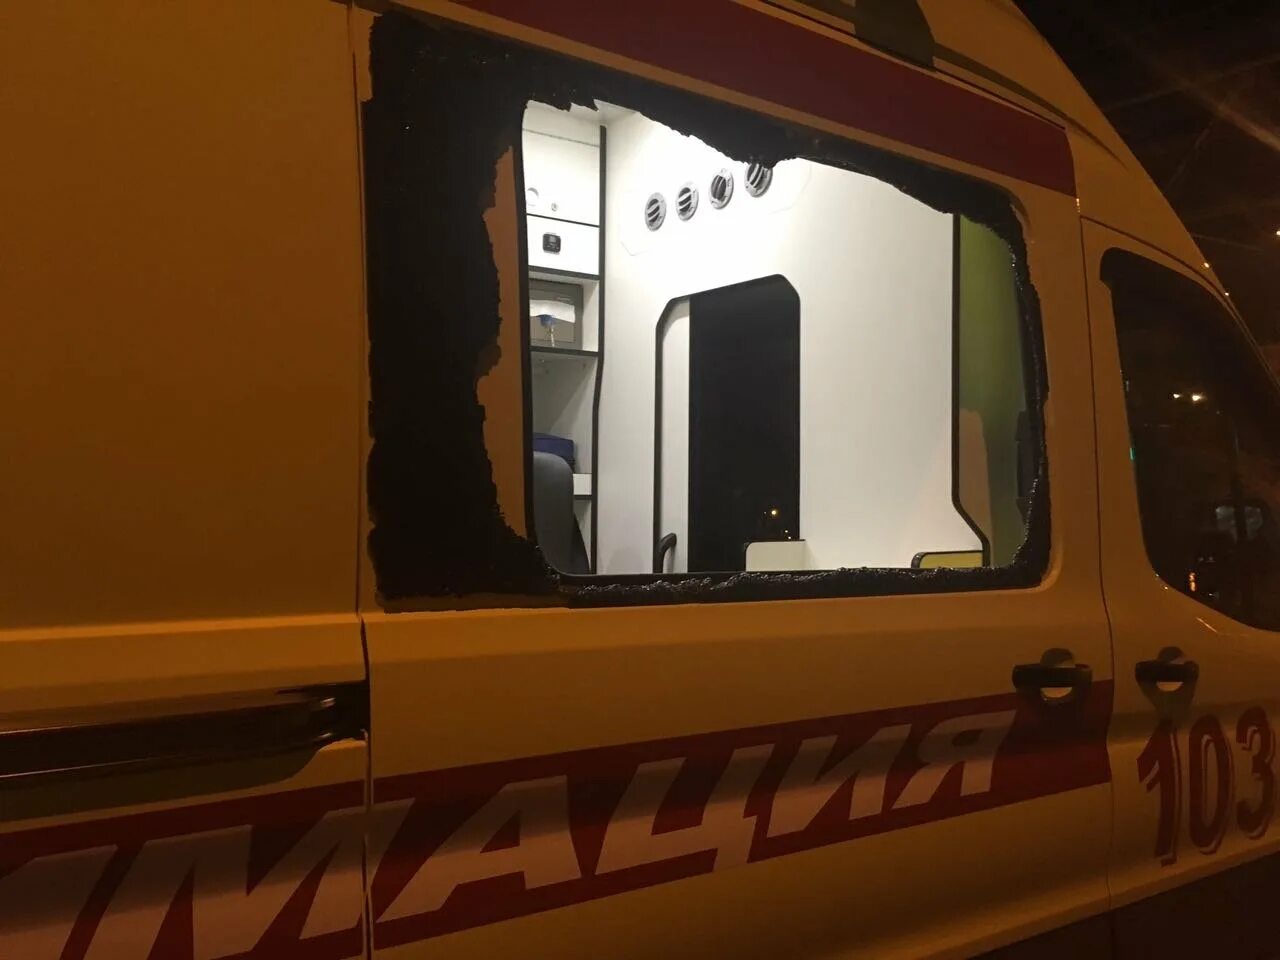 Машина скорой помощи ночью. Вид из скорой. Вид из скорой помощи ночью. Вид из машины скорой помощи. Вид из окна скорой помощи.